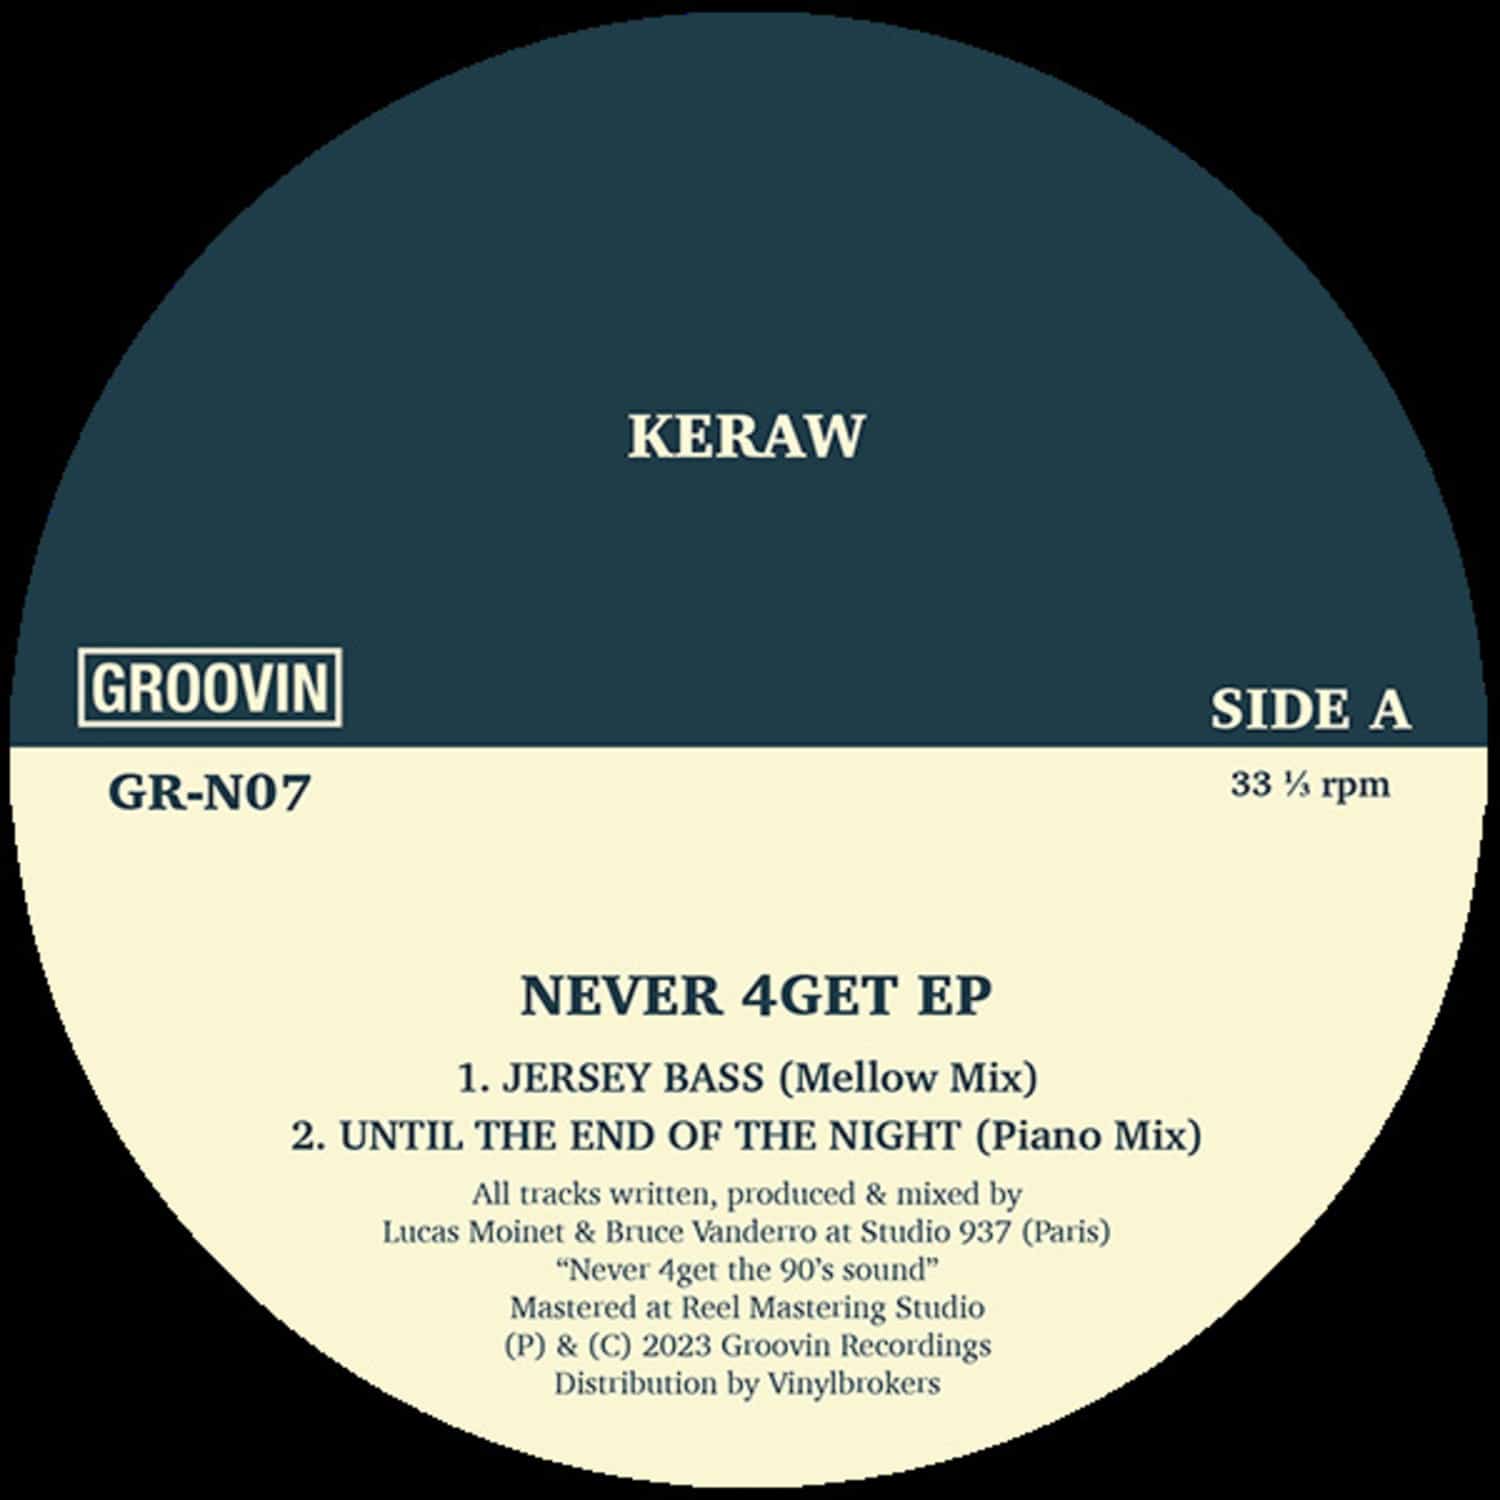 Keraw - NEVER 4GET EP